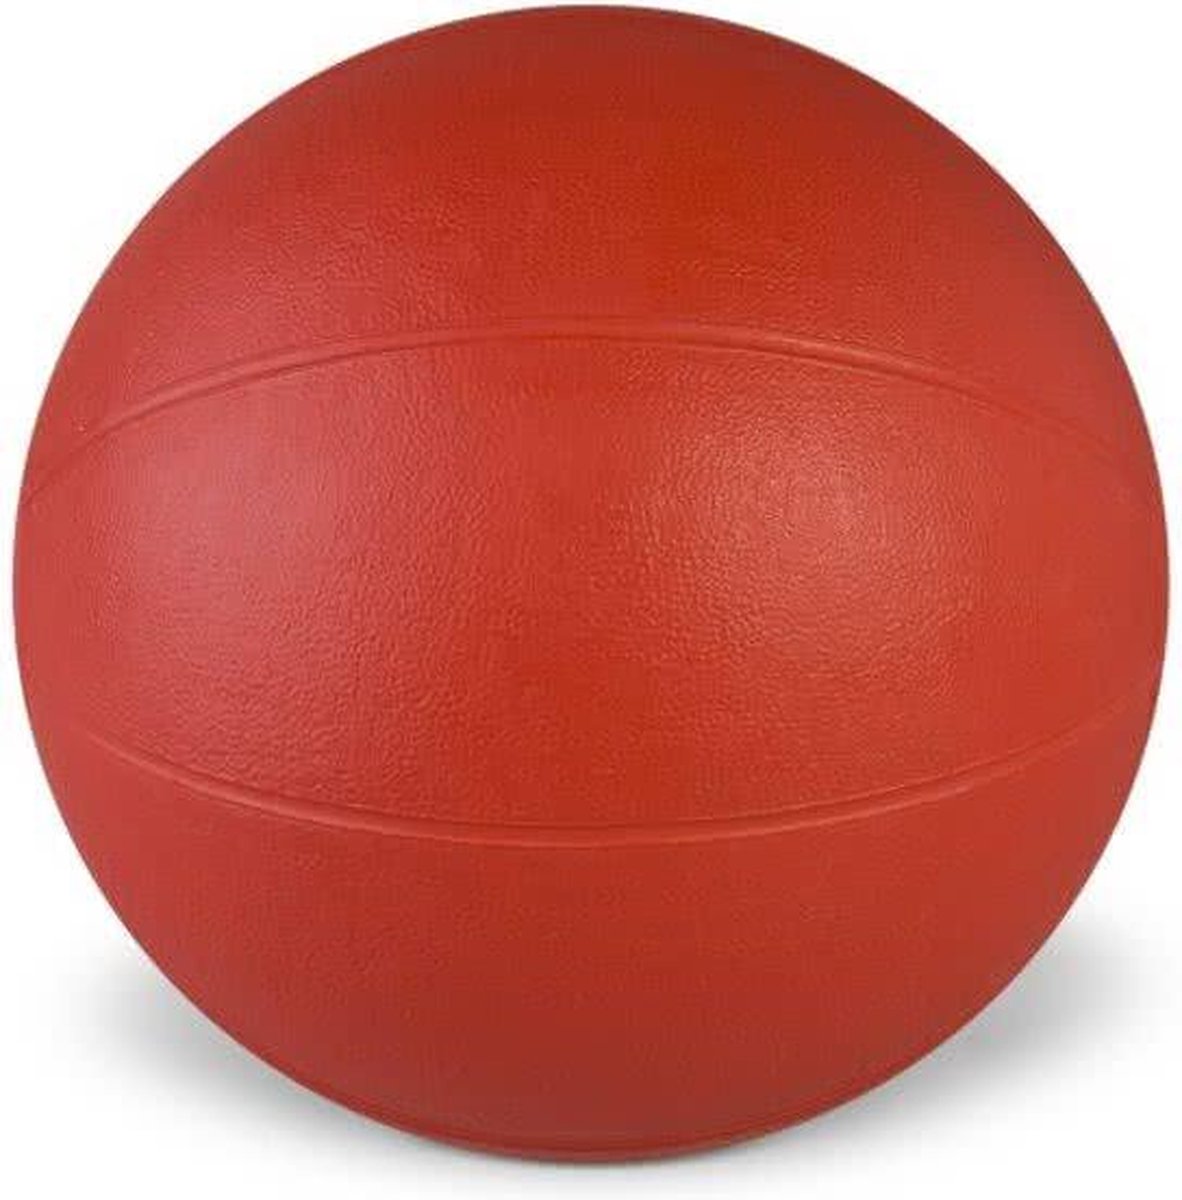 Medicine ball - Medicijnbal - 2 kilogram - rood